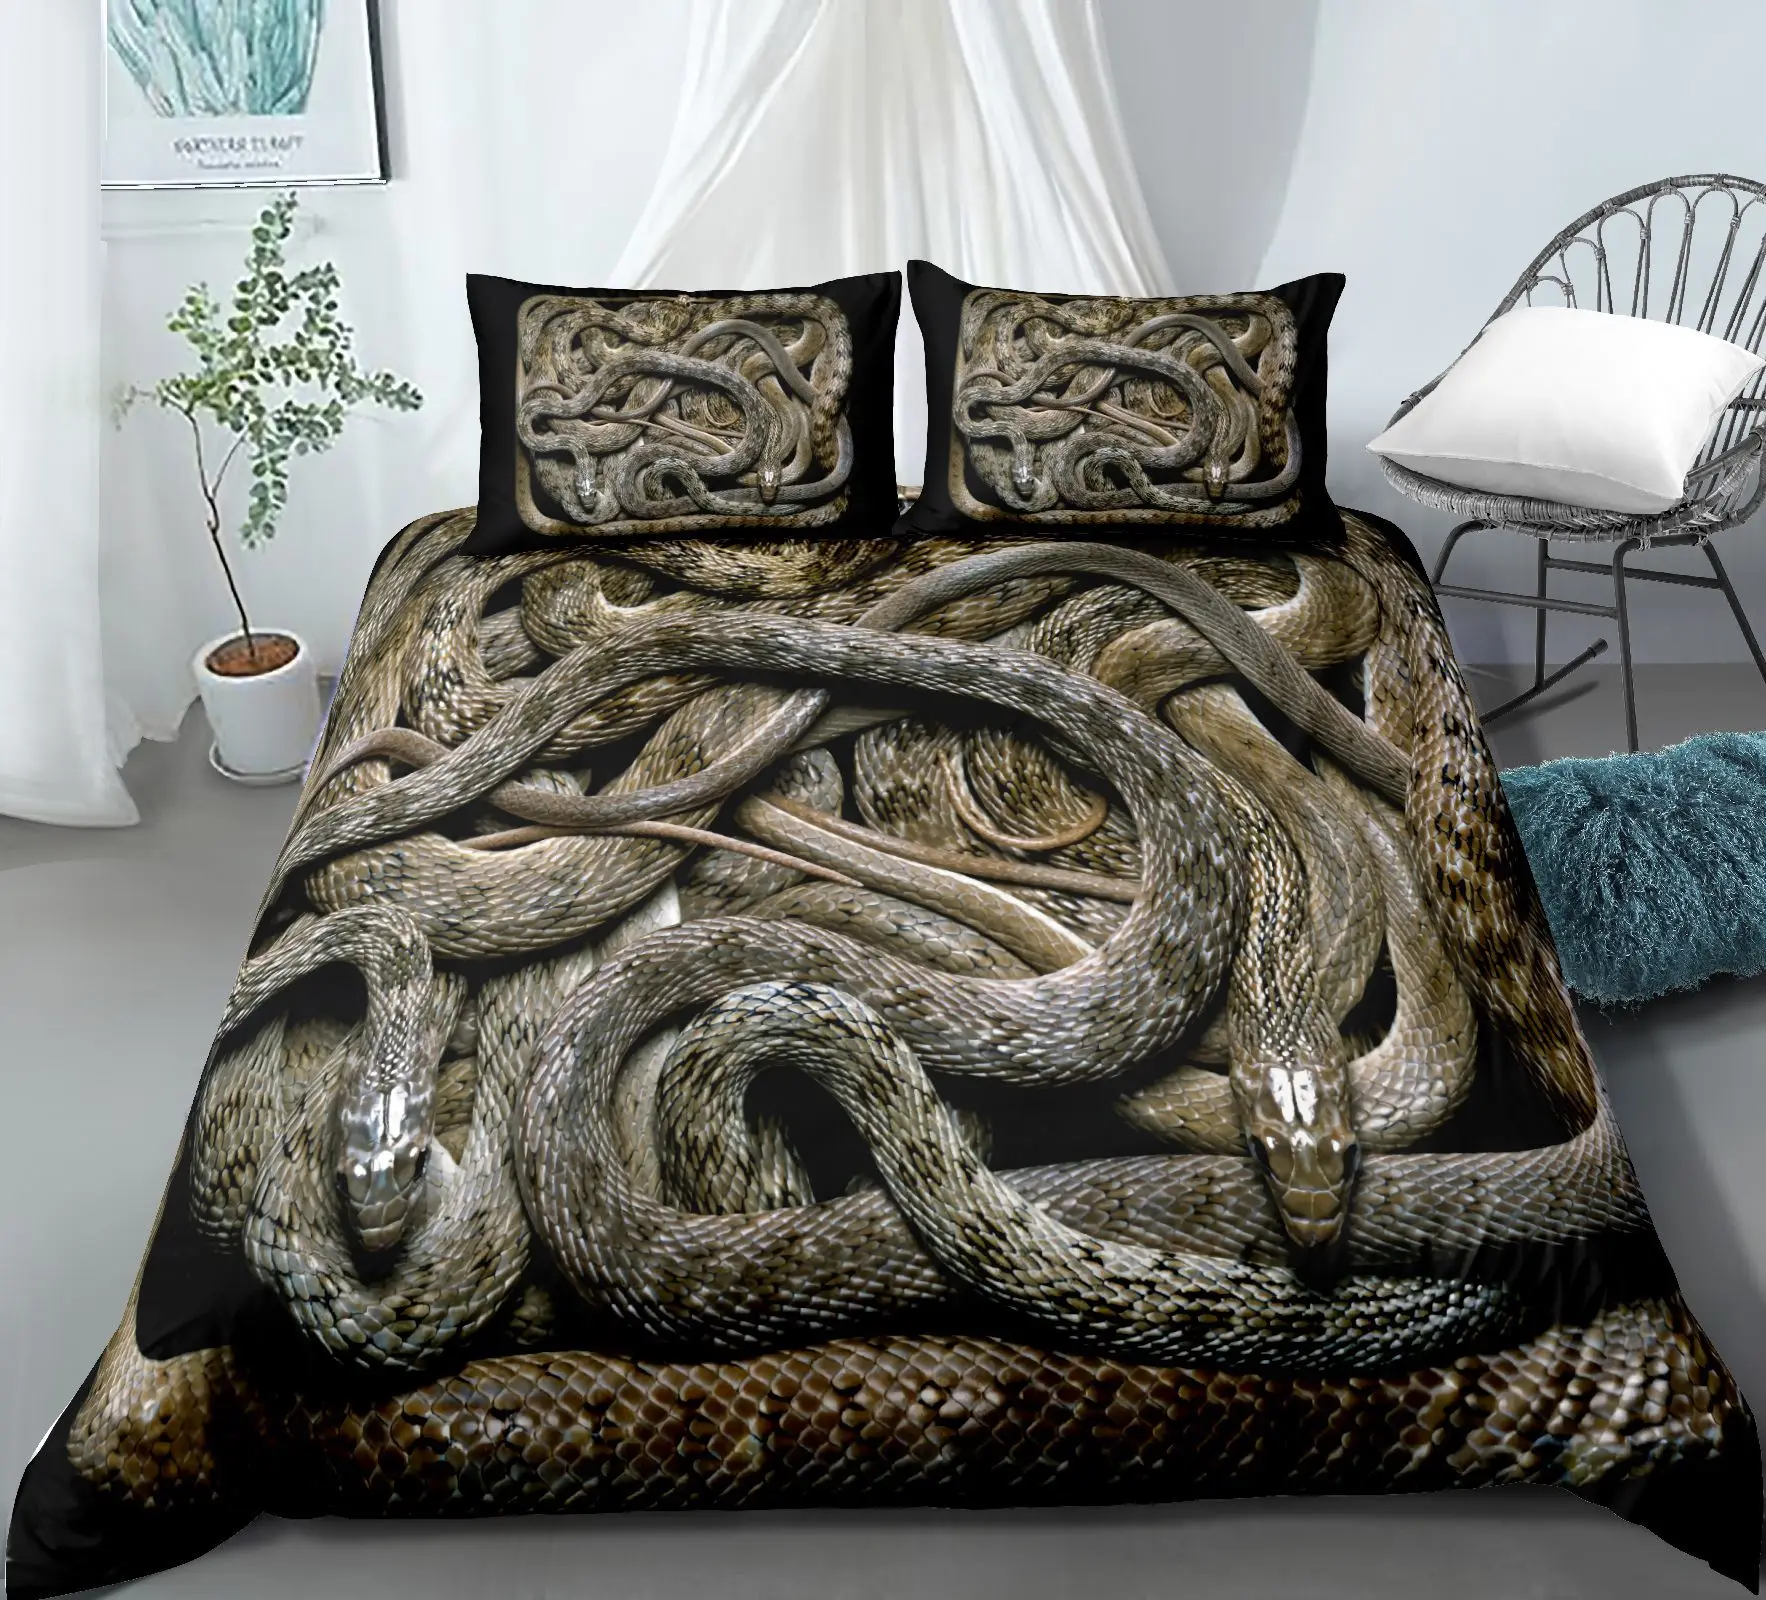 3D Snake Bedding Sets Cover For Teen Boy Single Queen Soft Bedspread Comforter Cover Zipper Design Bedding Set And Pillowcases